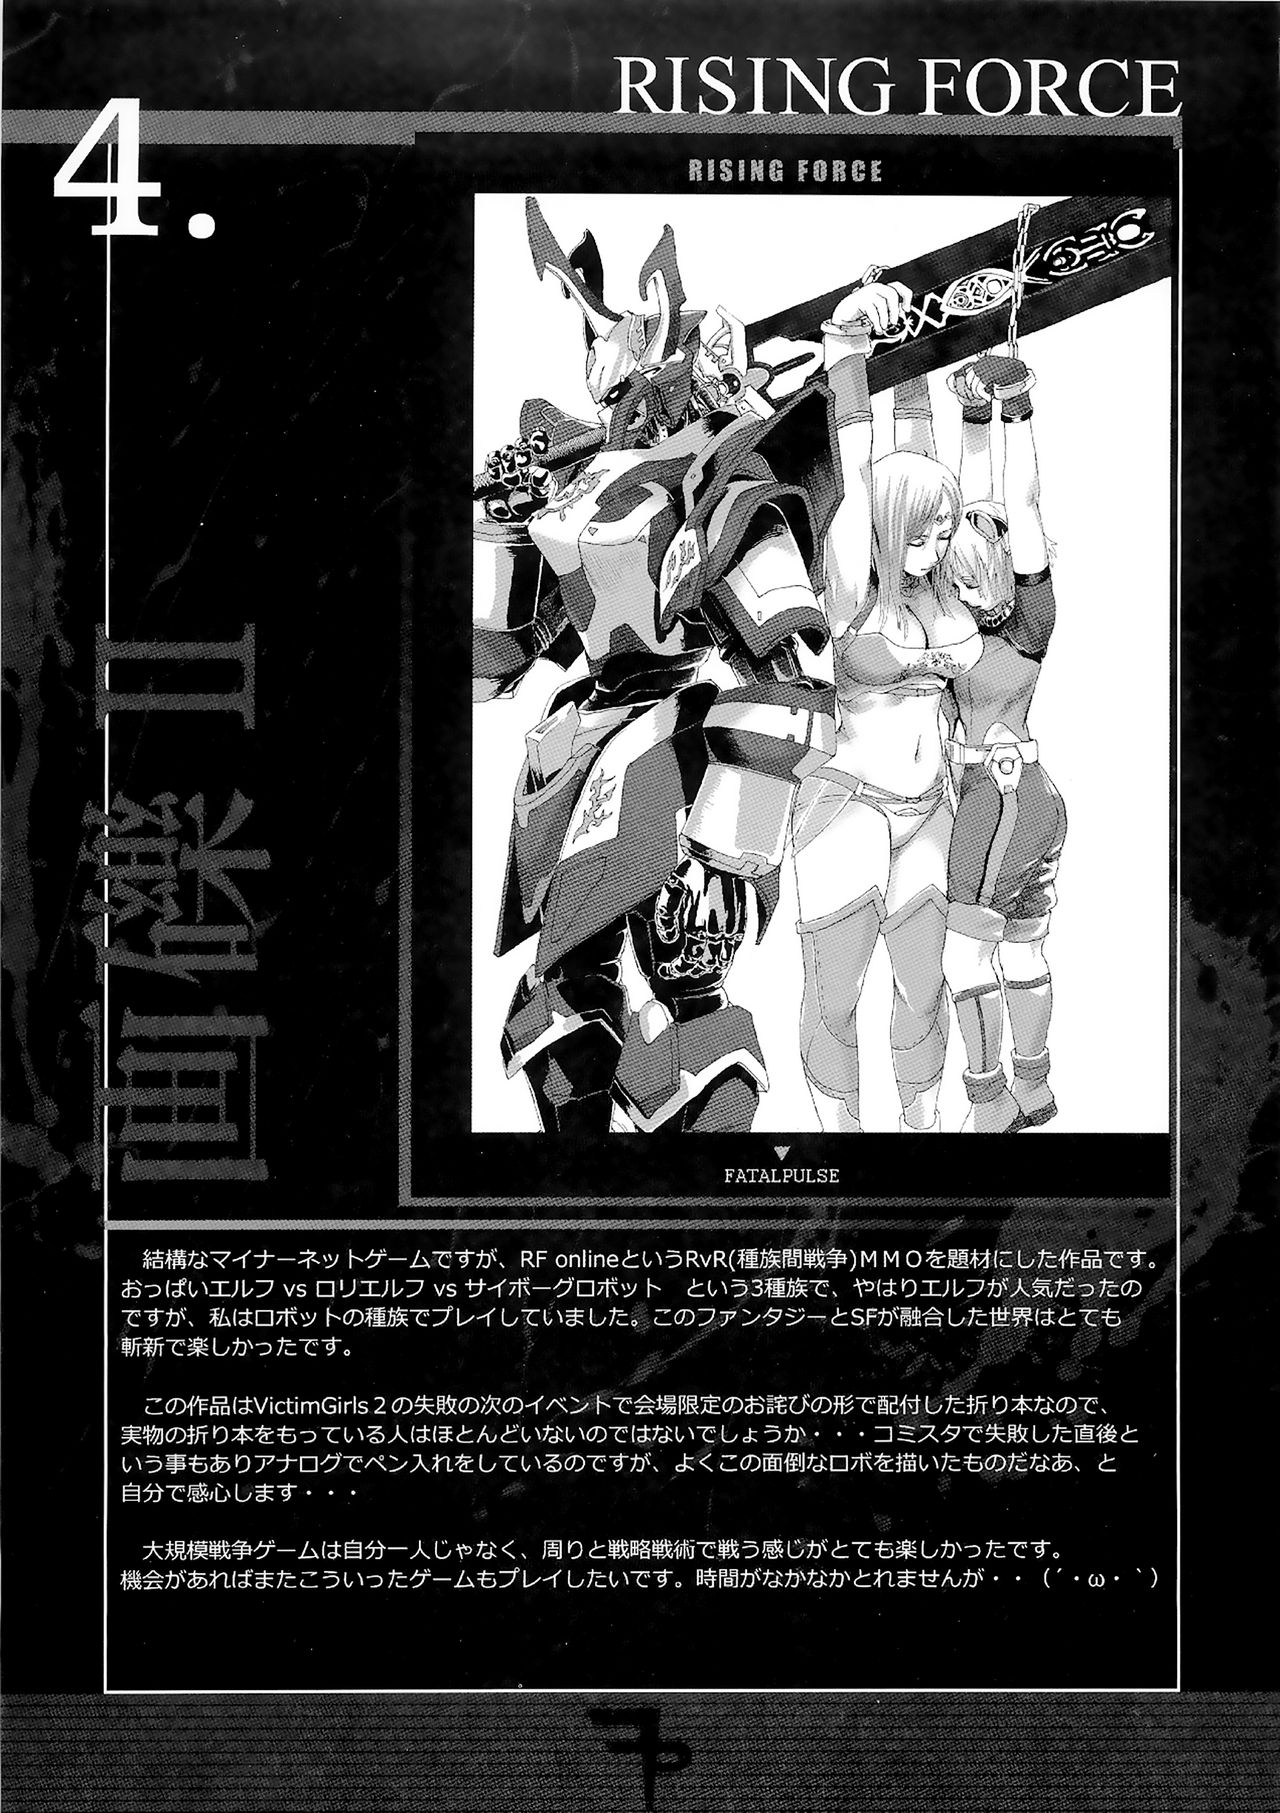 (C83) [Fatalpulse (朝凪)] VictimGirls Compiled Vol.1 -Victimgirls総集編1- MMO Game Selection (よろず)[中国翻訳]